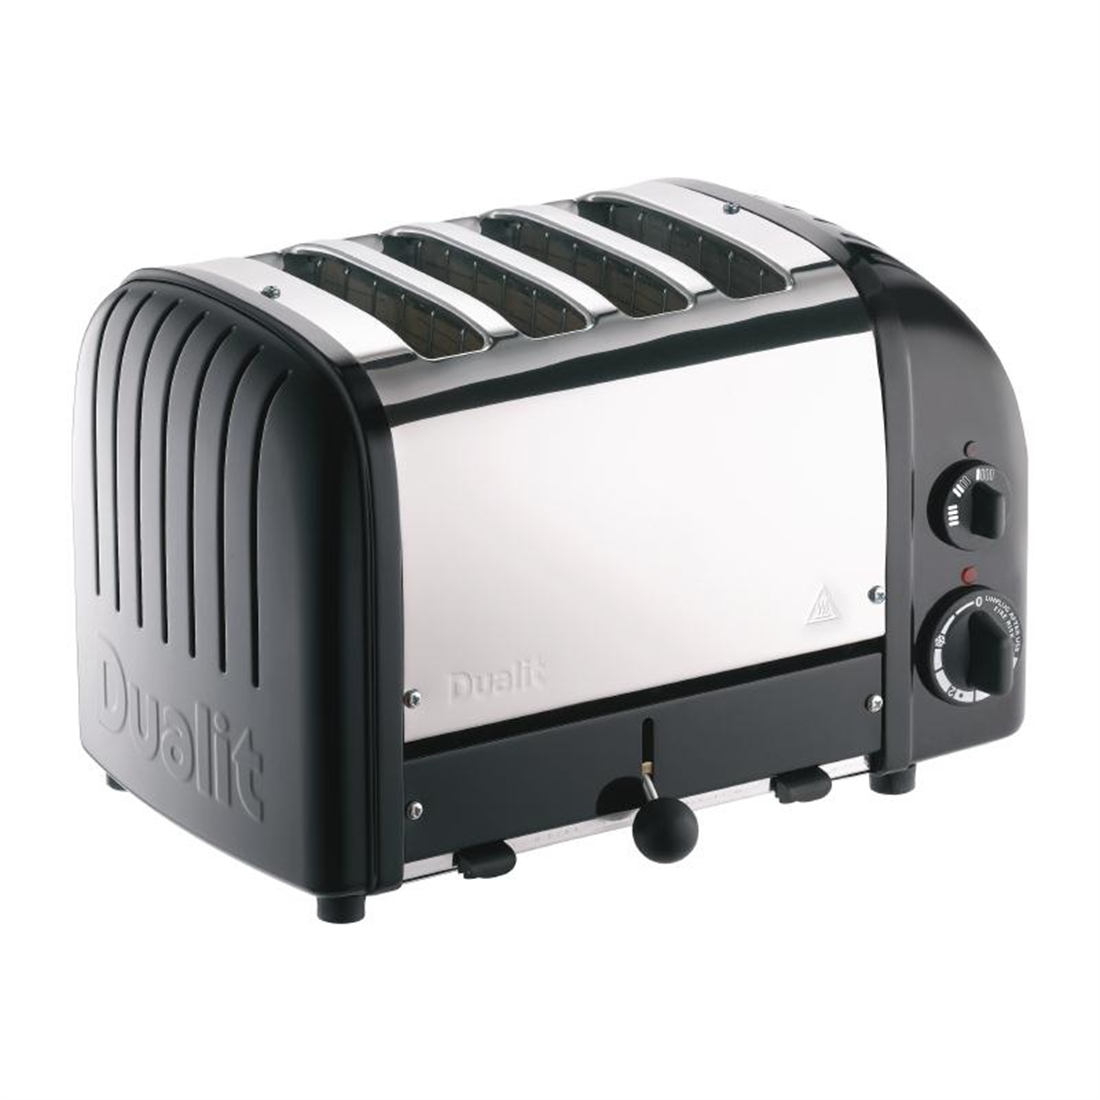 Dualit 2 x 2 Combi Vario 4 Slice Toaster Black 42166